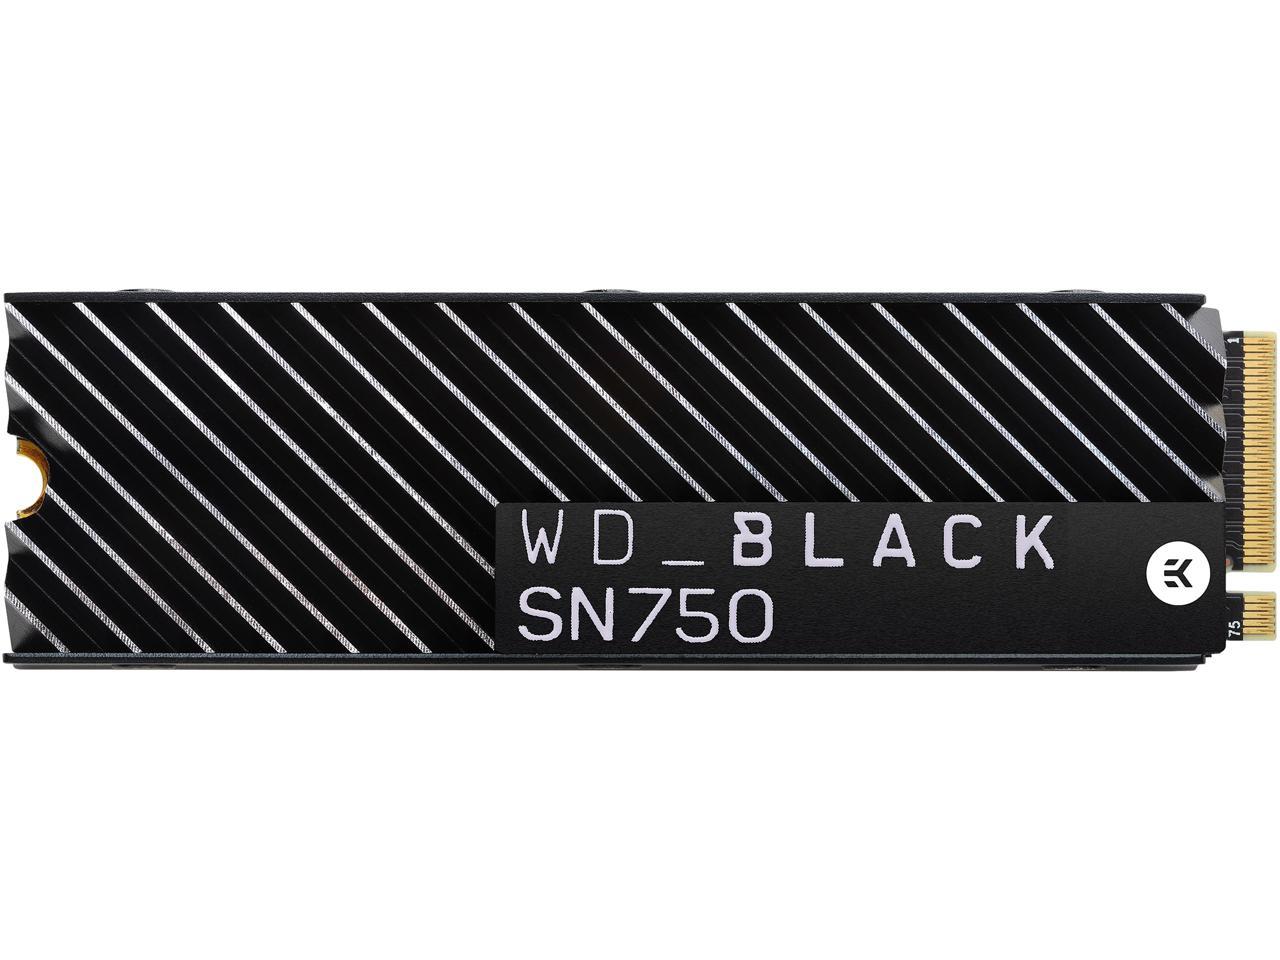 2TB WD Black SN750 (w/HS) NVMe SSD @Newegg $207